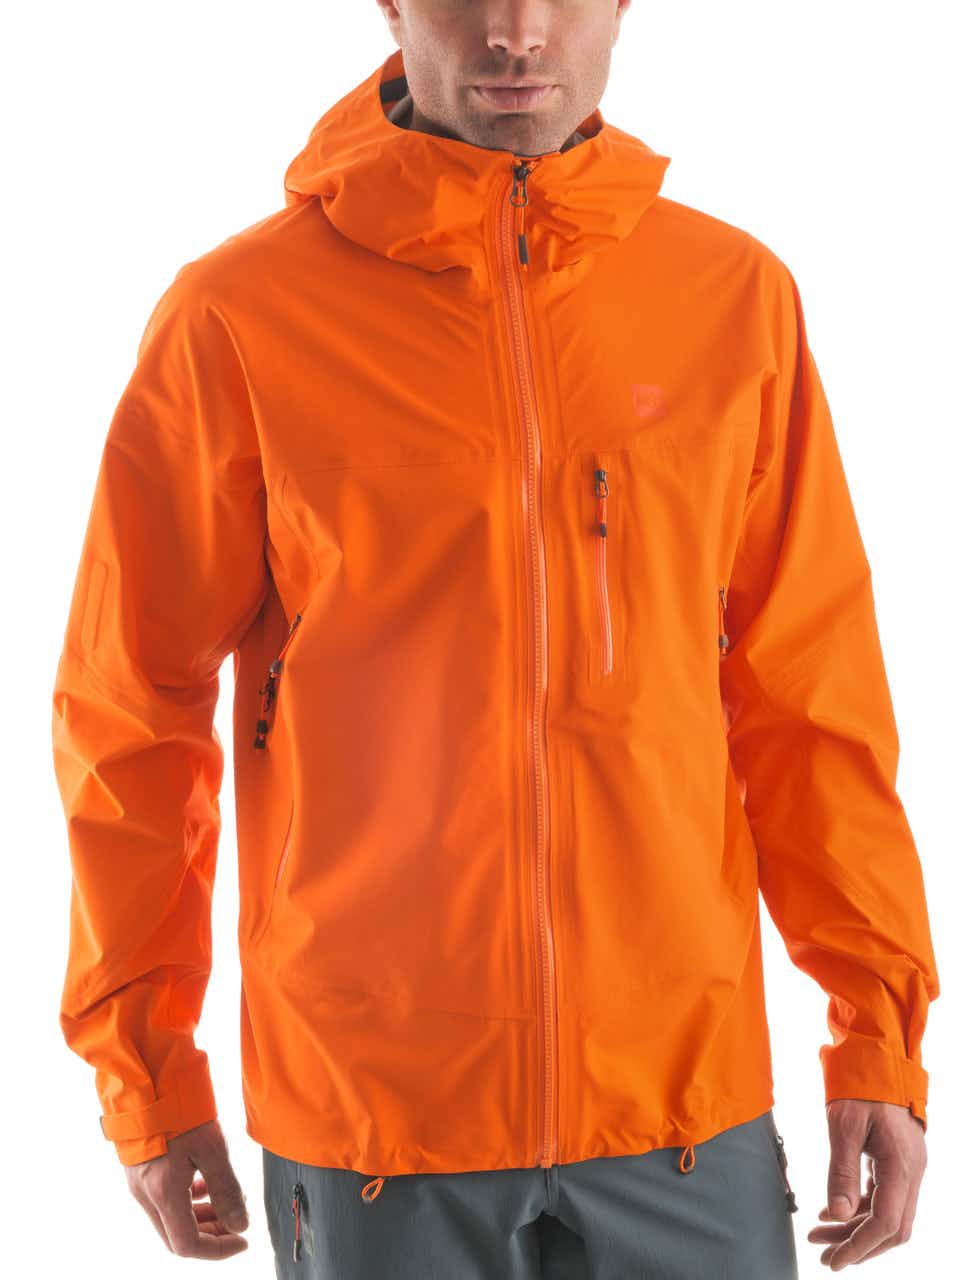 Flightcheck Jacket Orange Peel